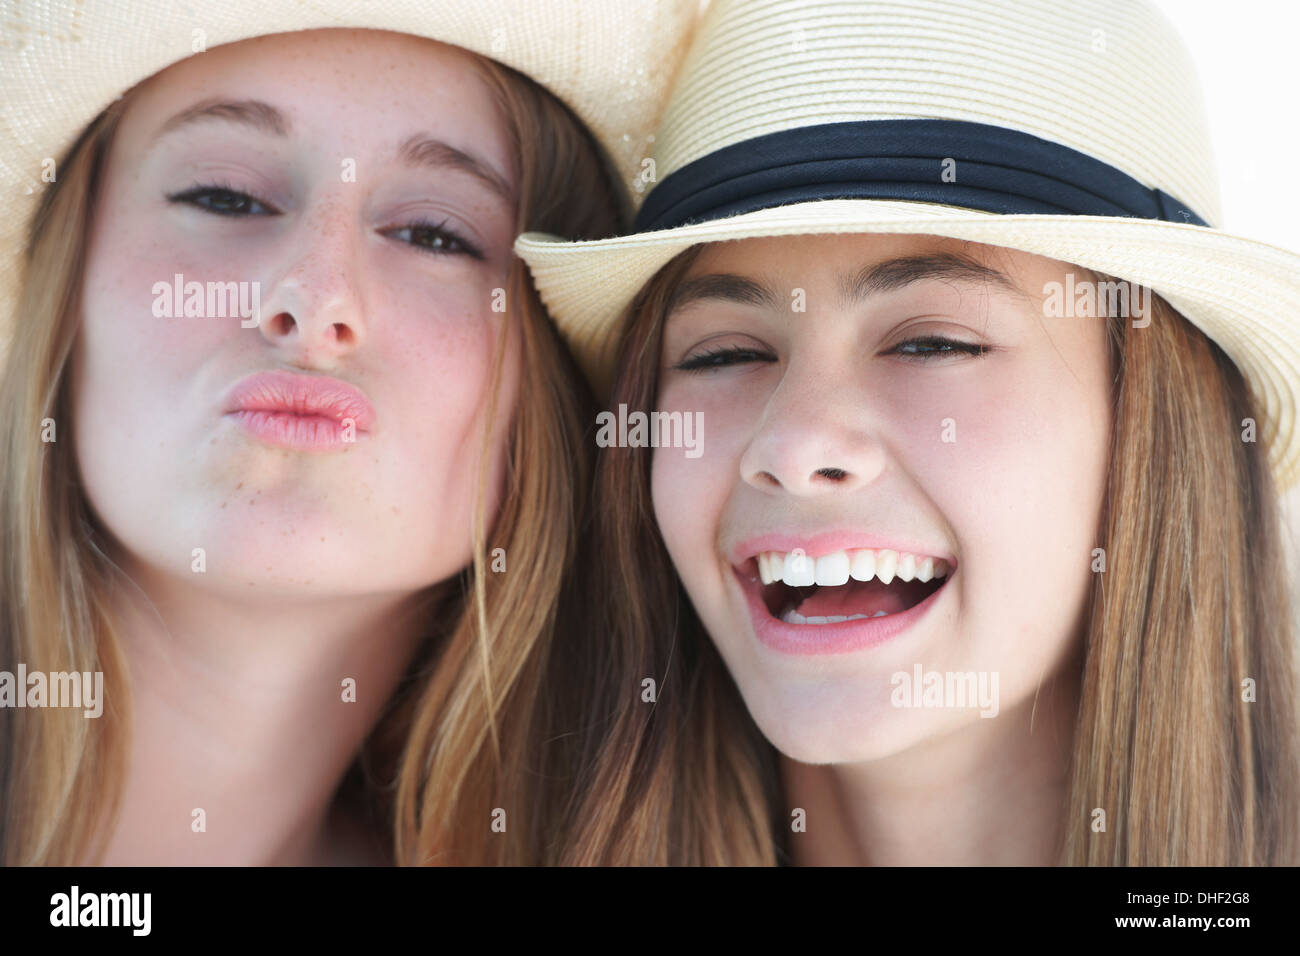 Retrato de dos niñas adolescentes con sombreros Foto de stock